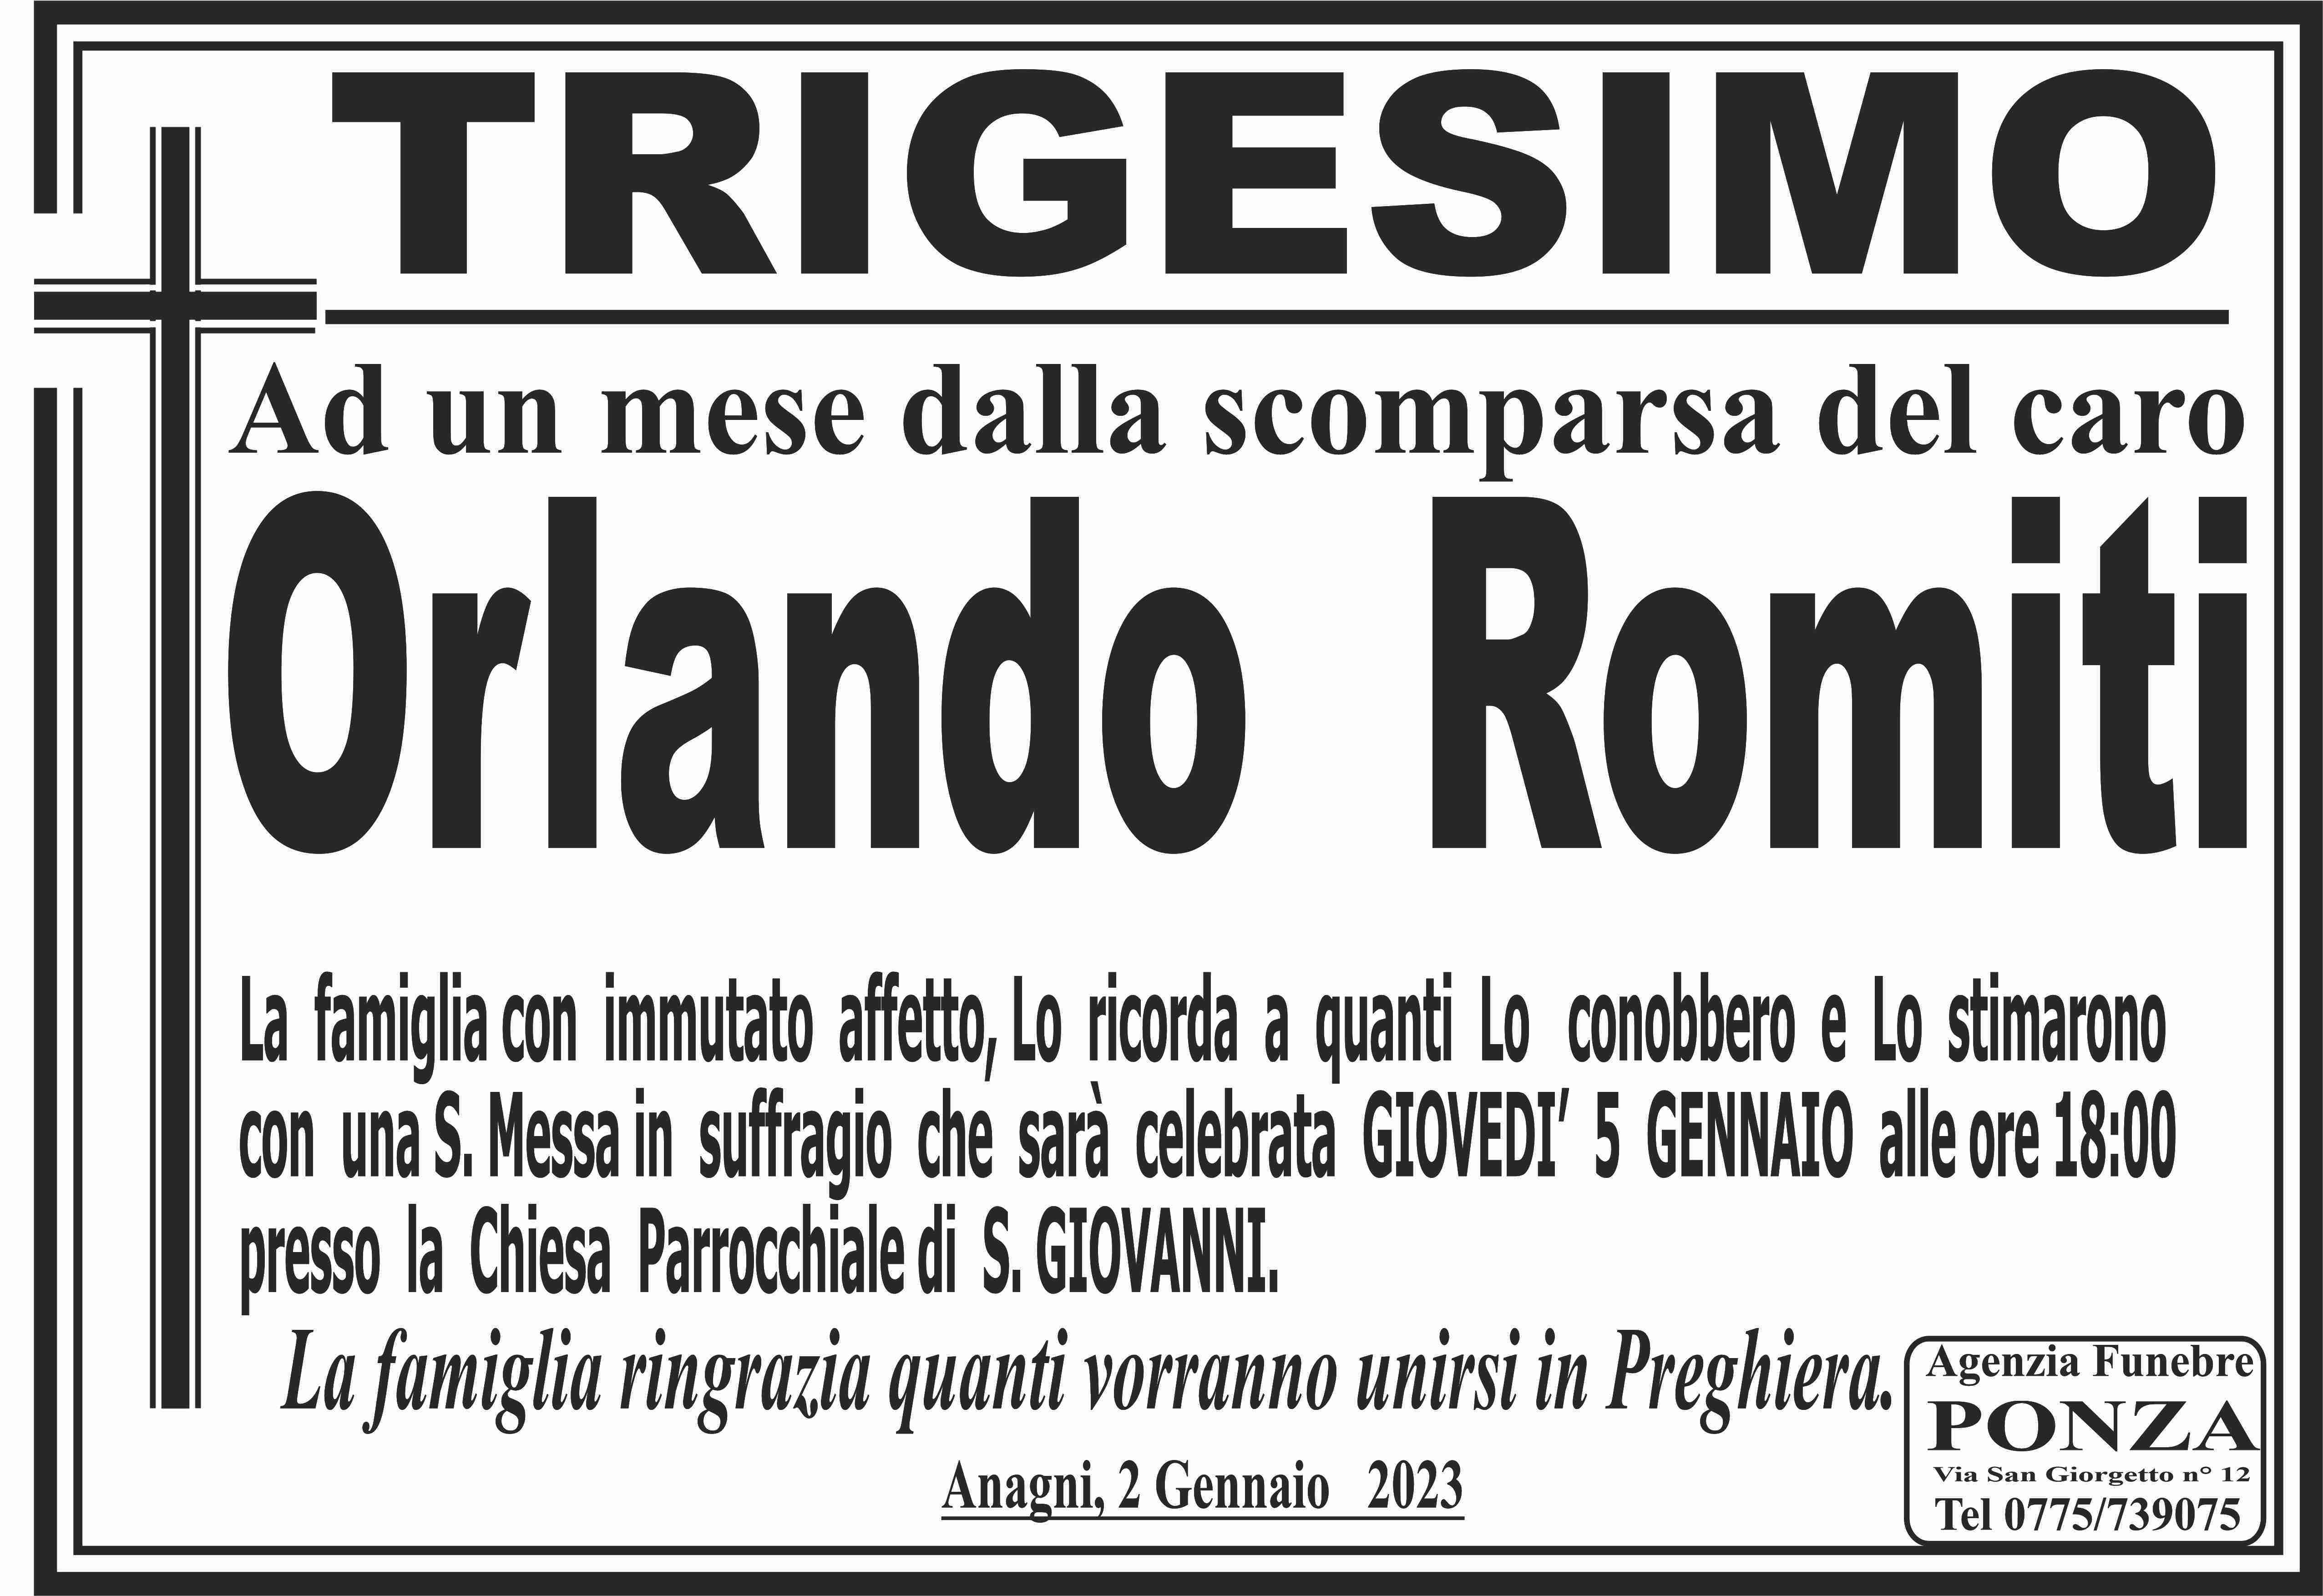 Orlando Romiti